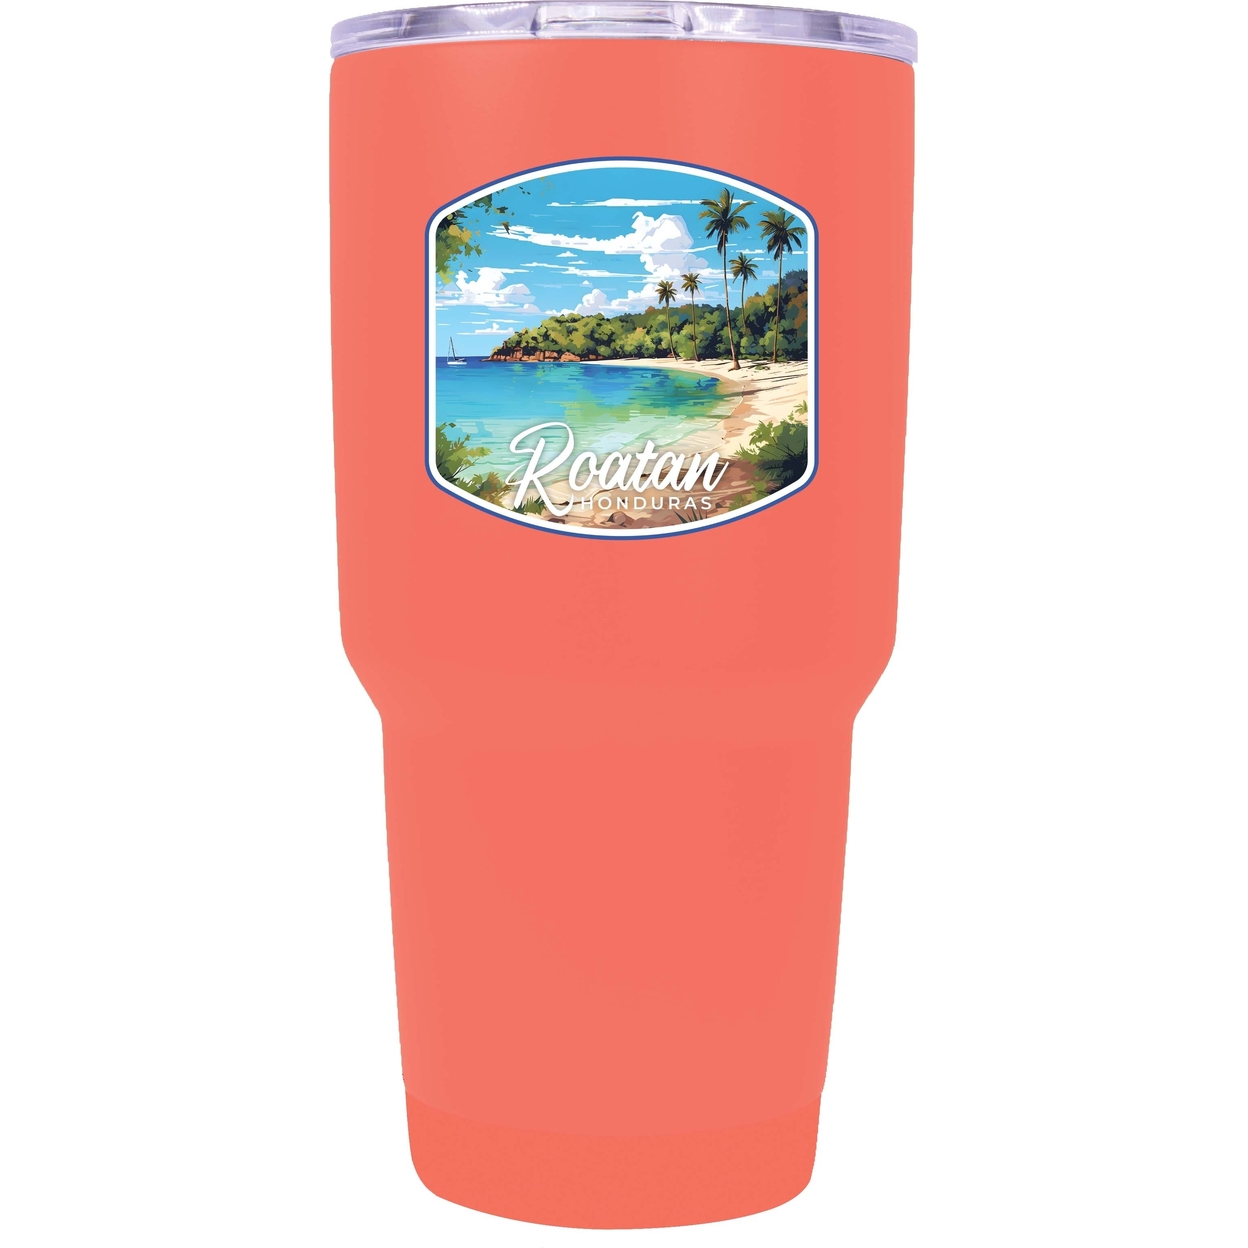 Roatan Honduras Design C Souvenir 24 Oz Insulated Tumbler - Coral,,Single